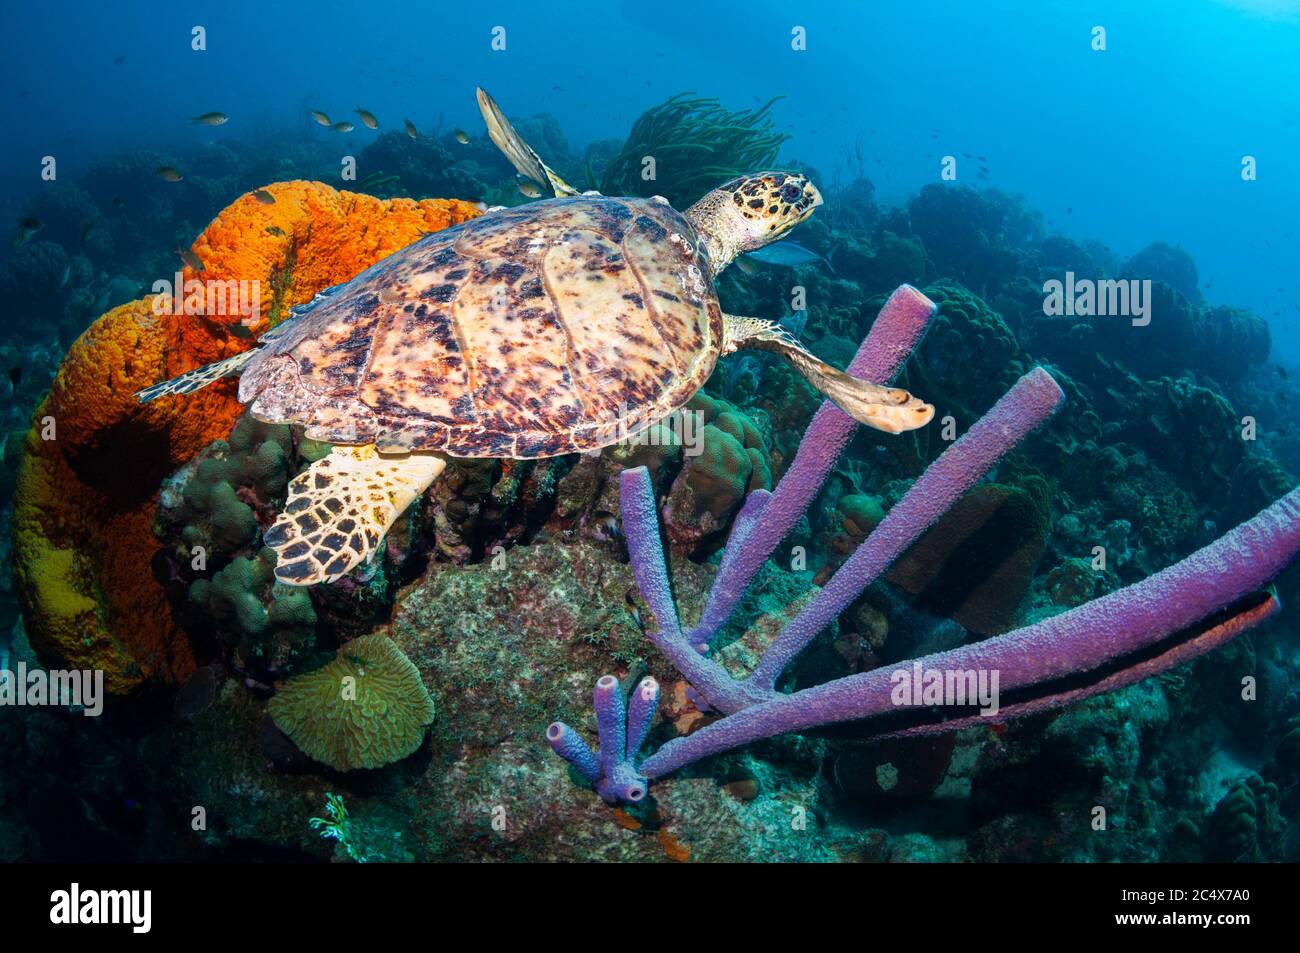 Hawksbill turtle swimming over coral reef scenery with Orange elephant ear sponge (Agelas clathrodes), Stove-pipe sponges (Aplysina archeri).  Bonaire Stock Photo